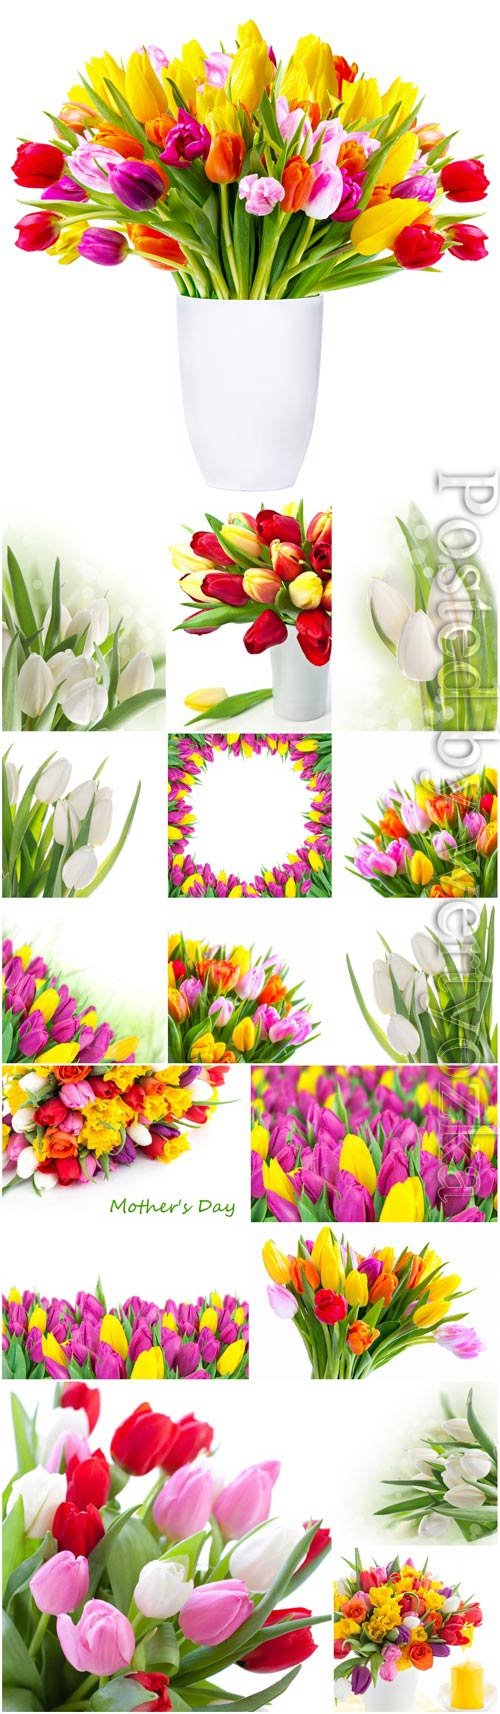 Tulips of different varieties stock photo